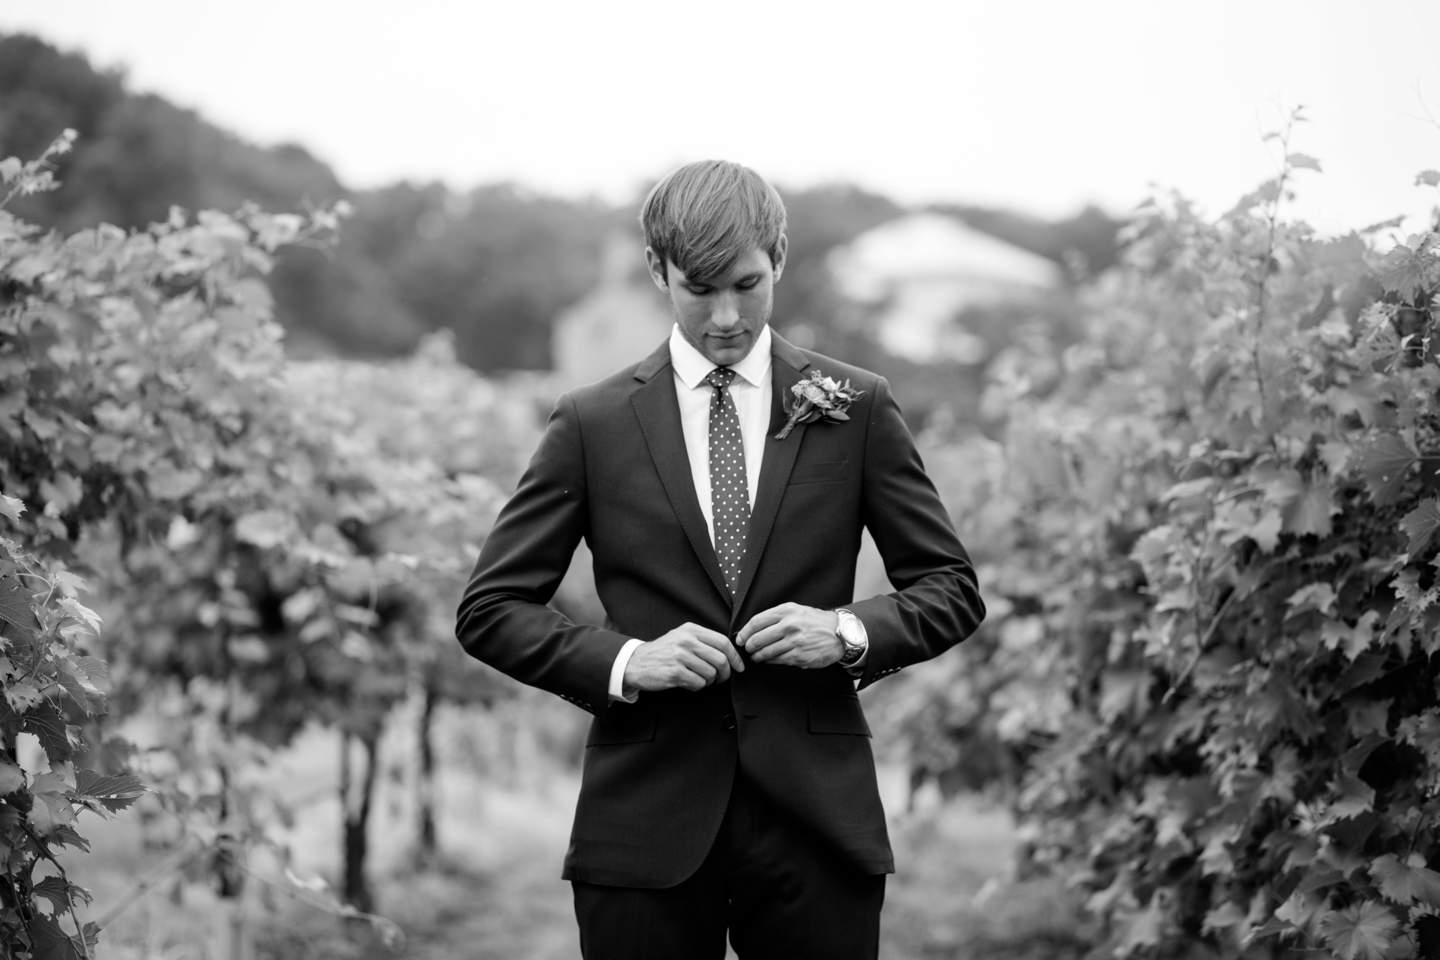 Winery Wedding, St. Louis Wedding Photography